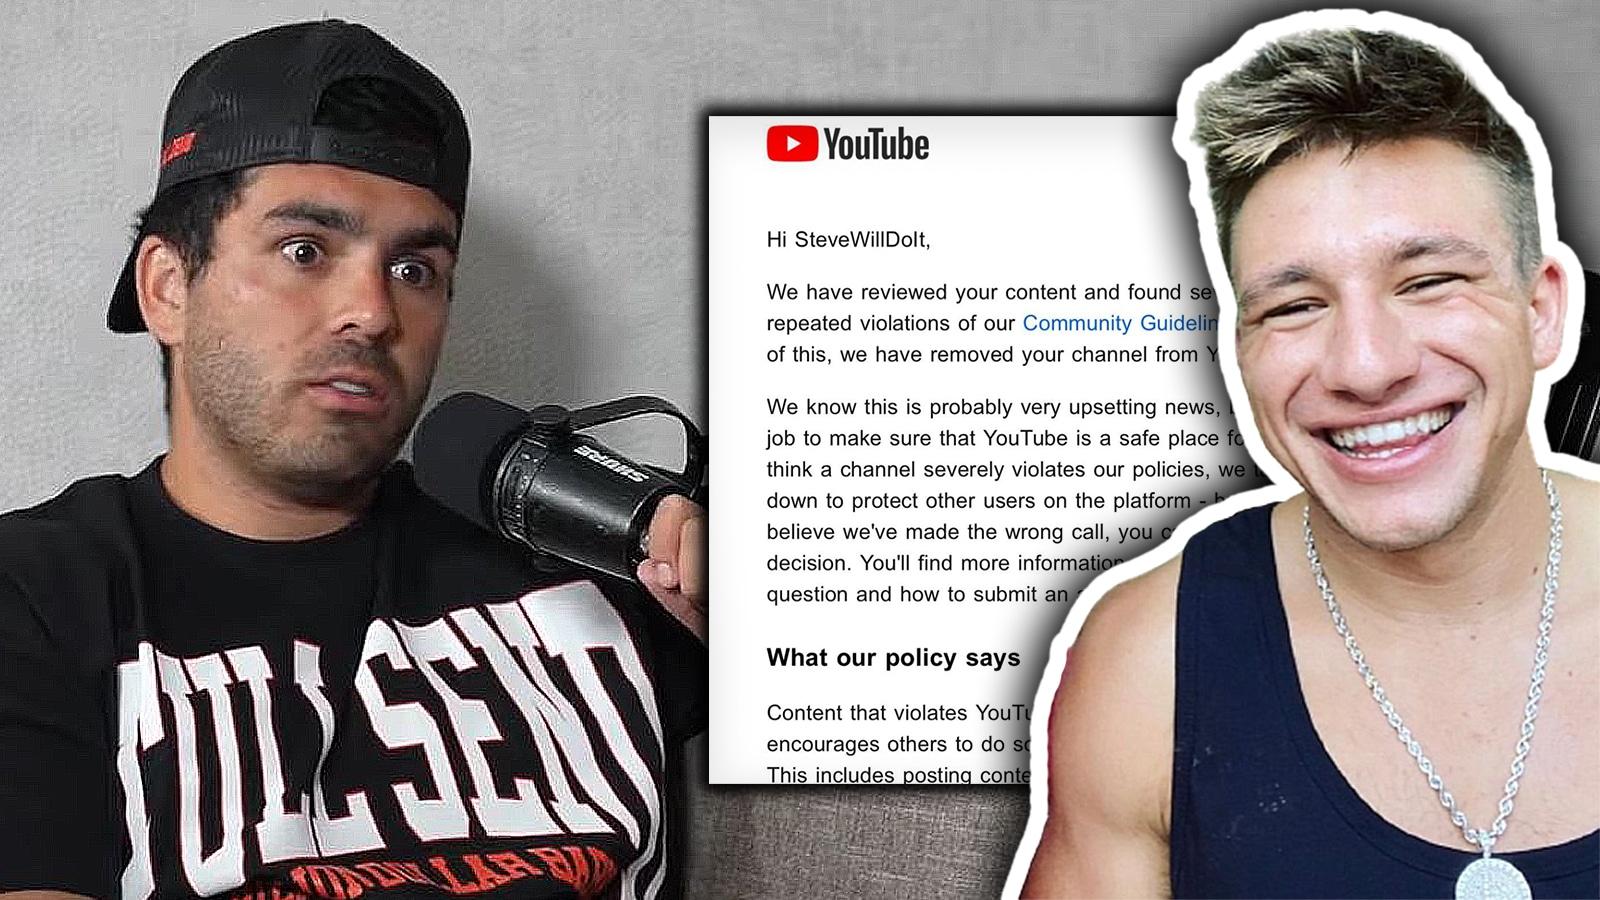 NELK Boys shocked by SteveWillDoIts crazy YouTube ban